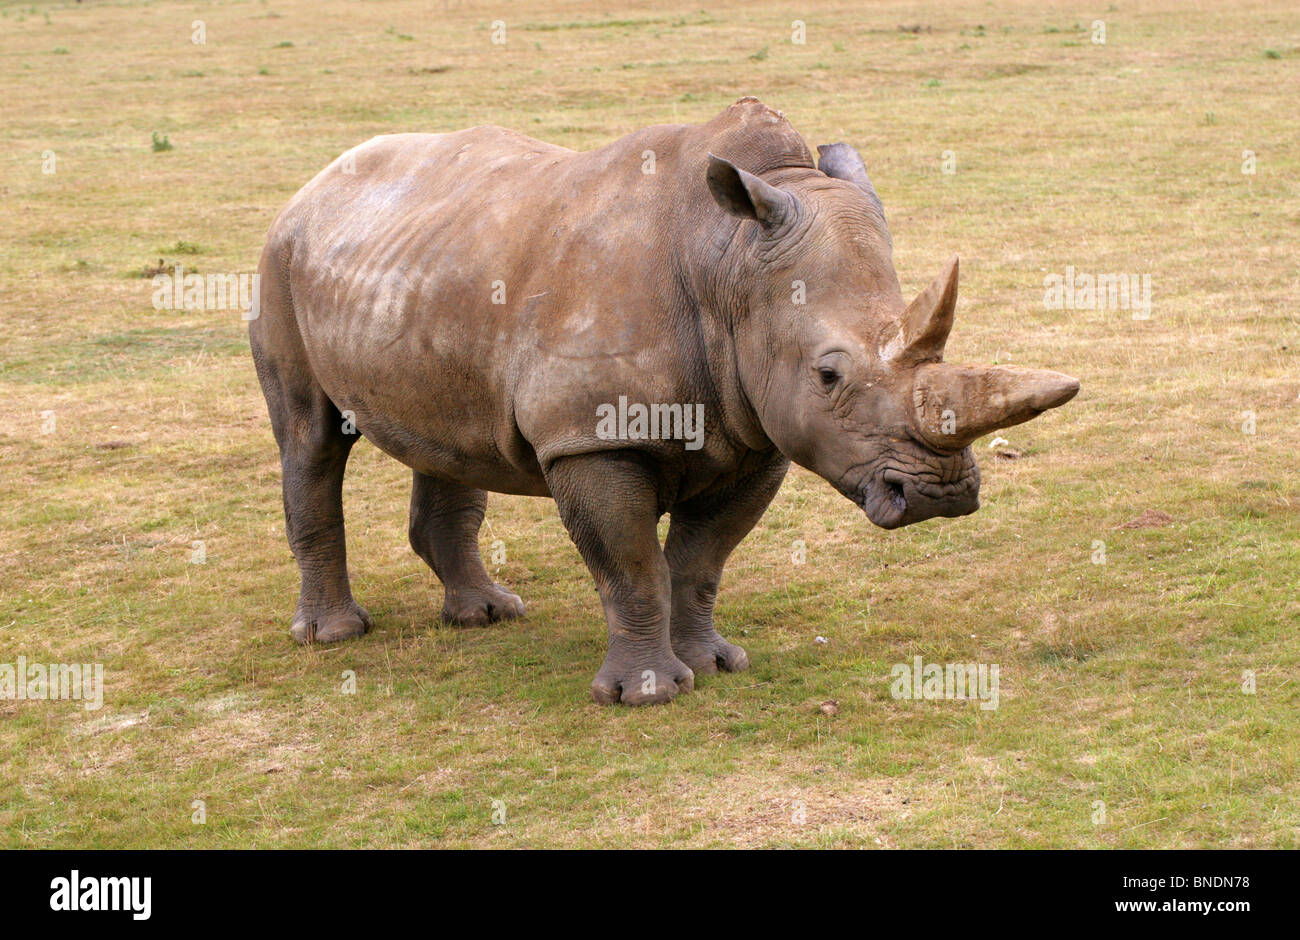 Southern White Rhinoceros, Ceratotherium simum, Rhinocerotidae. Africa. Stock Photo